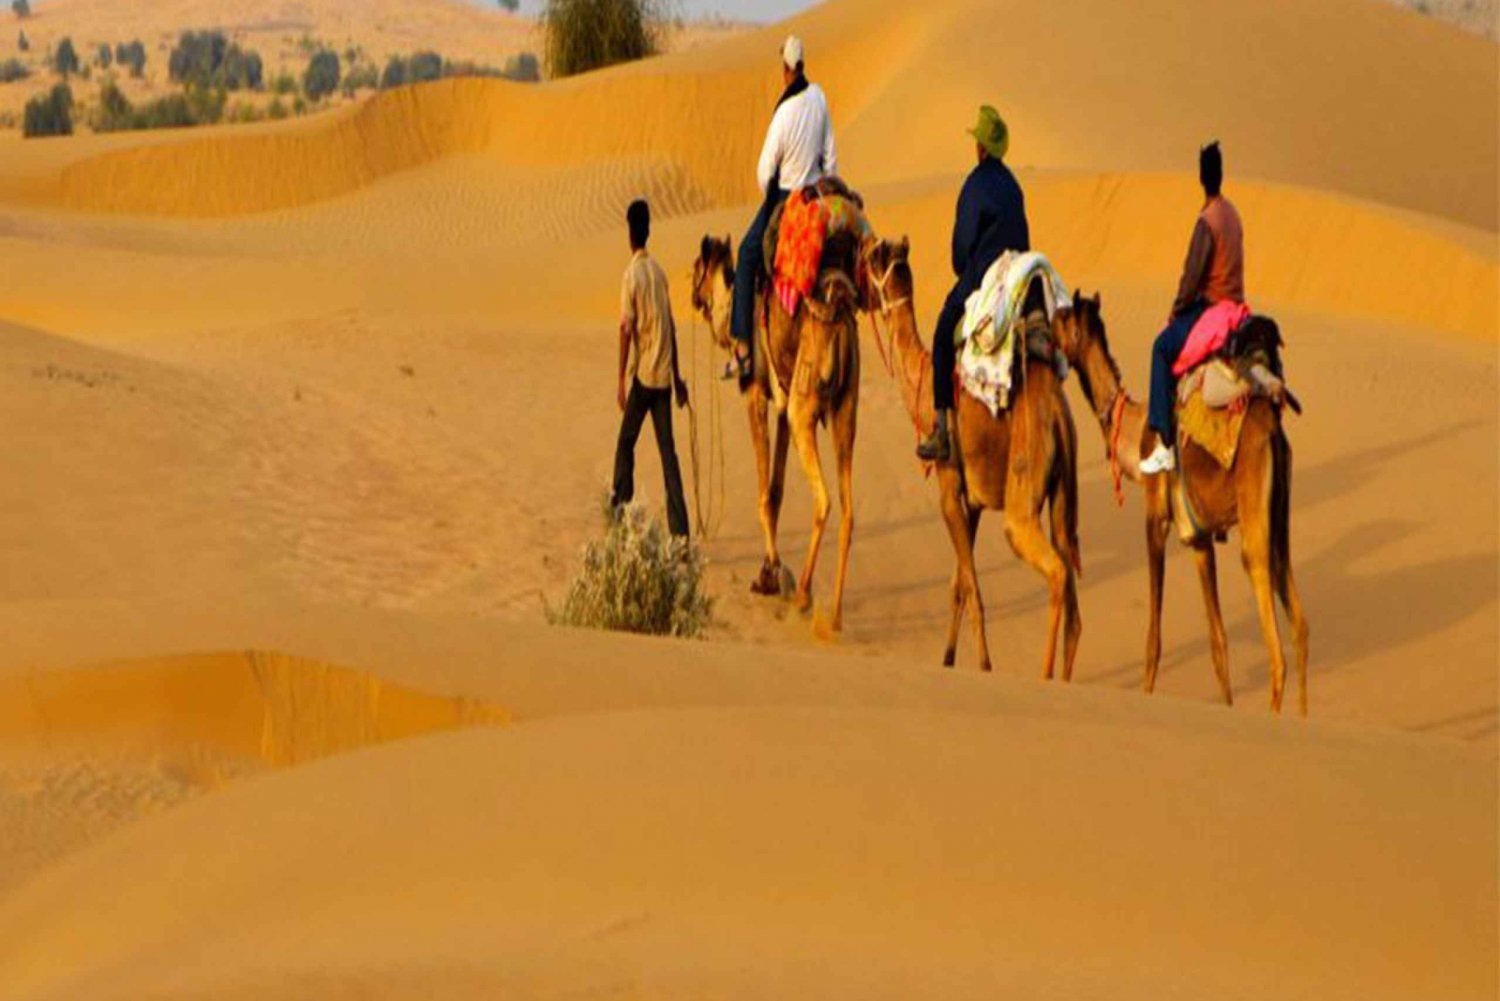 Jaisalmer Private City Tour with Camel Safari in Desert